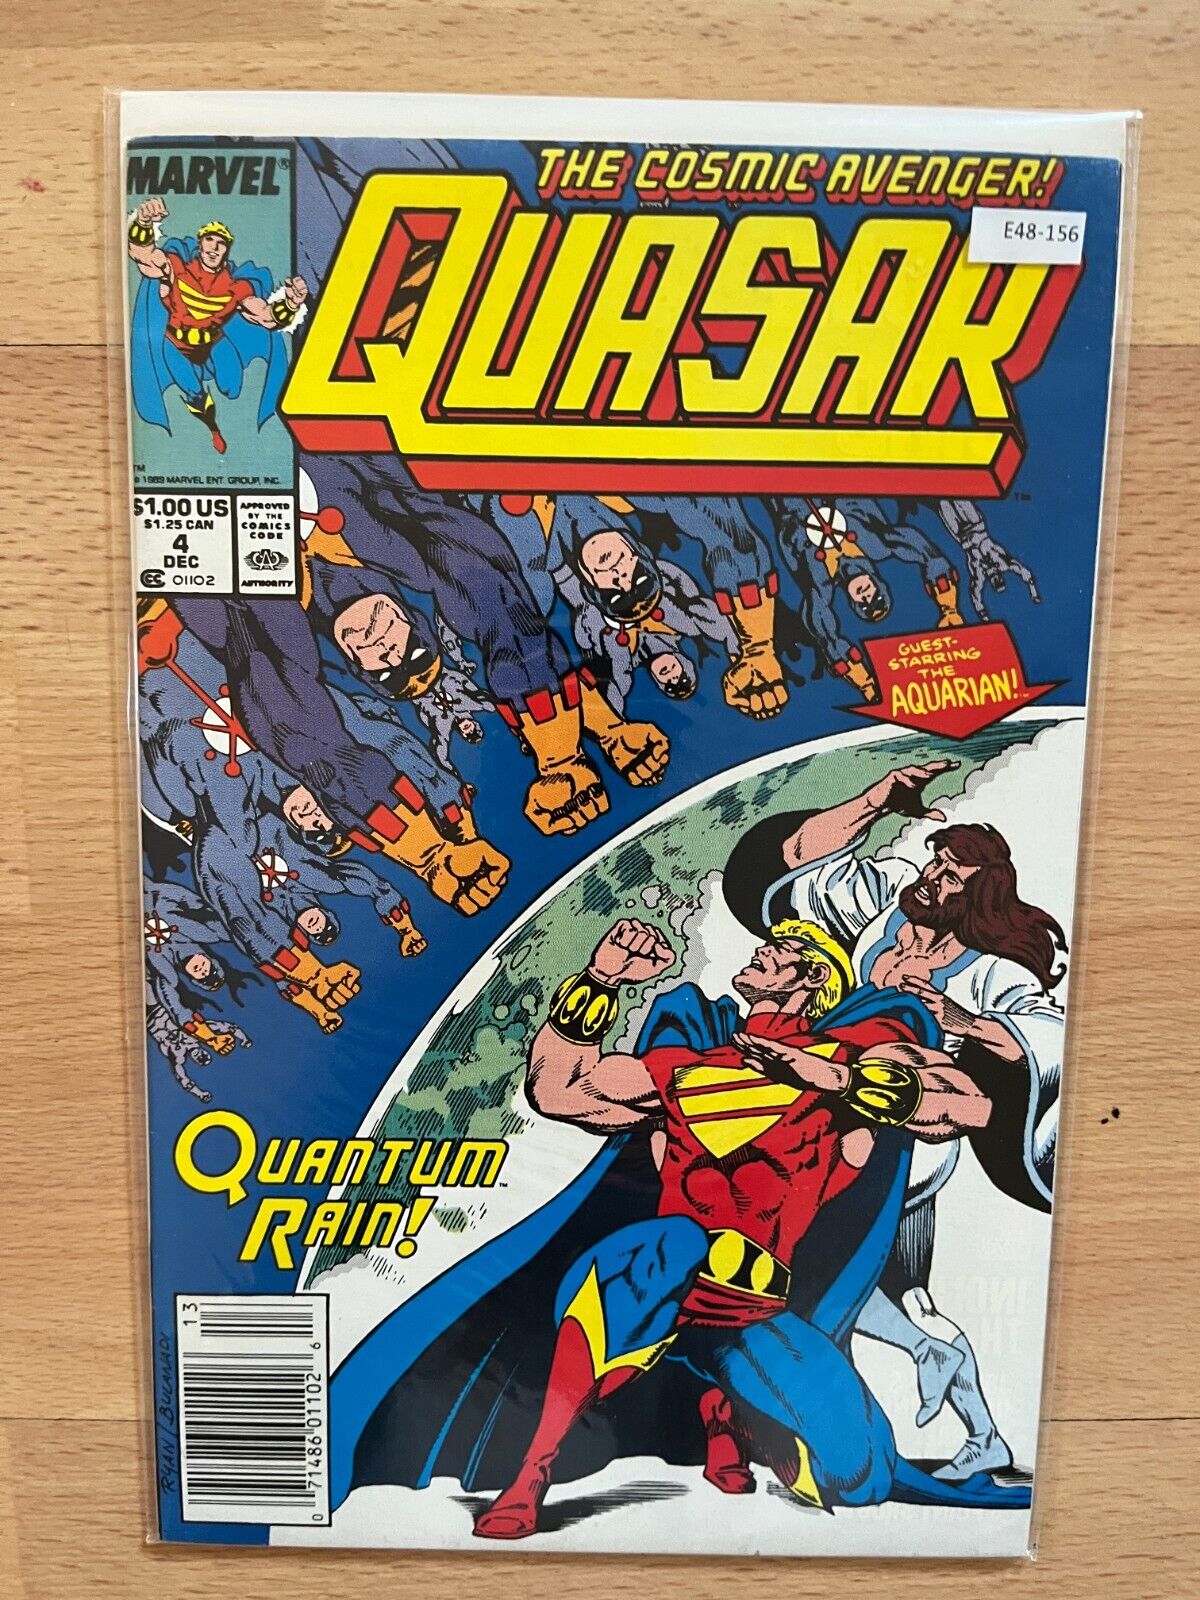 Quasar 4 Marvel Comics Newsstand - E48-156